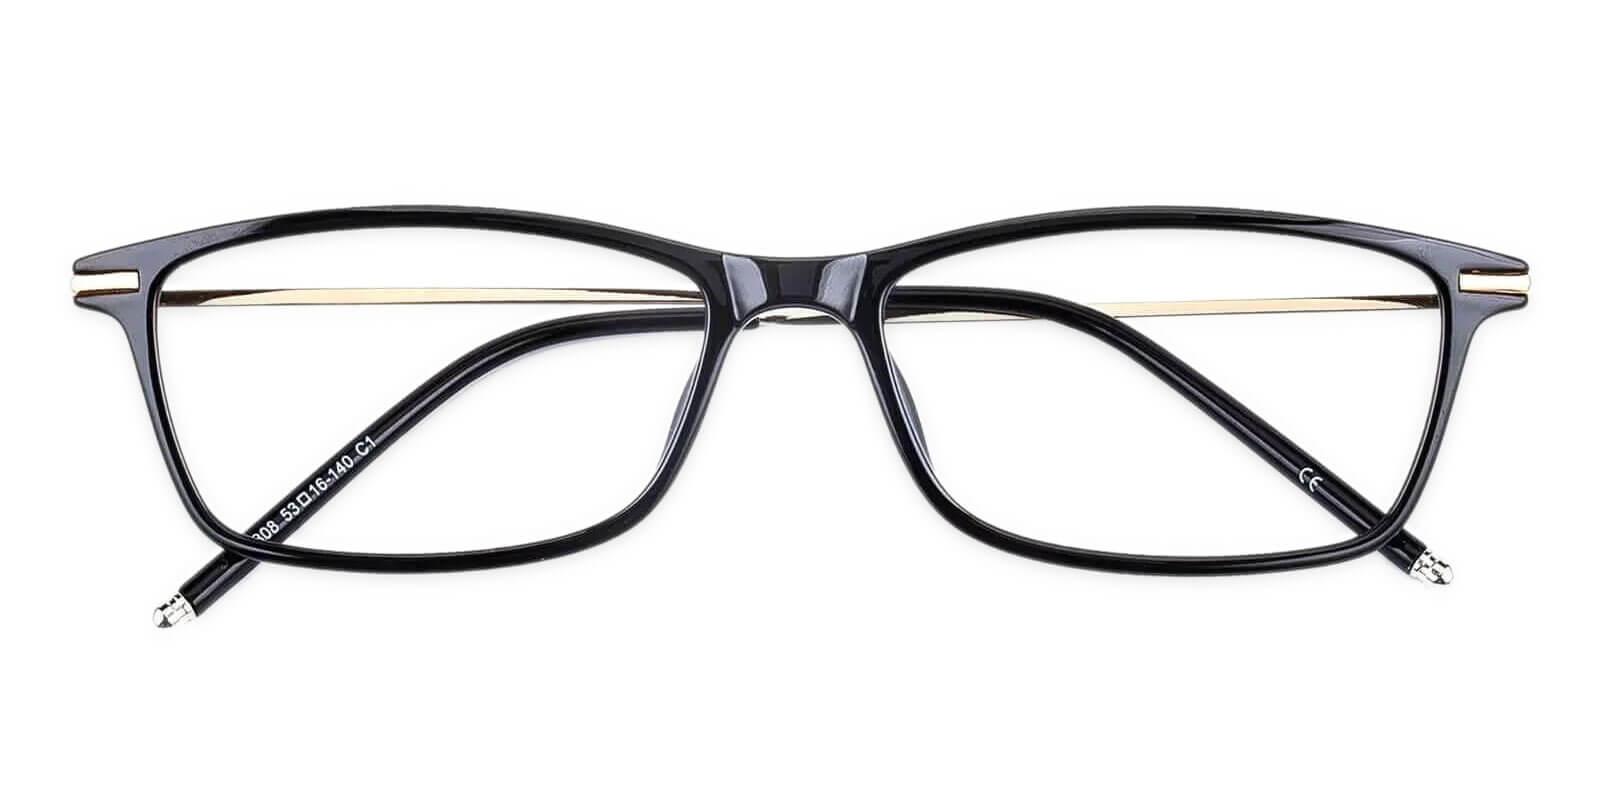 Radcliffe Black TR Lightweight , UniversalBridgeFit , Eyeglasses Frames from ABBE Glasses